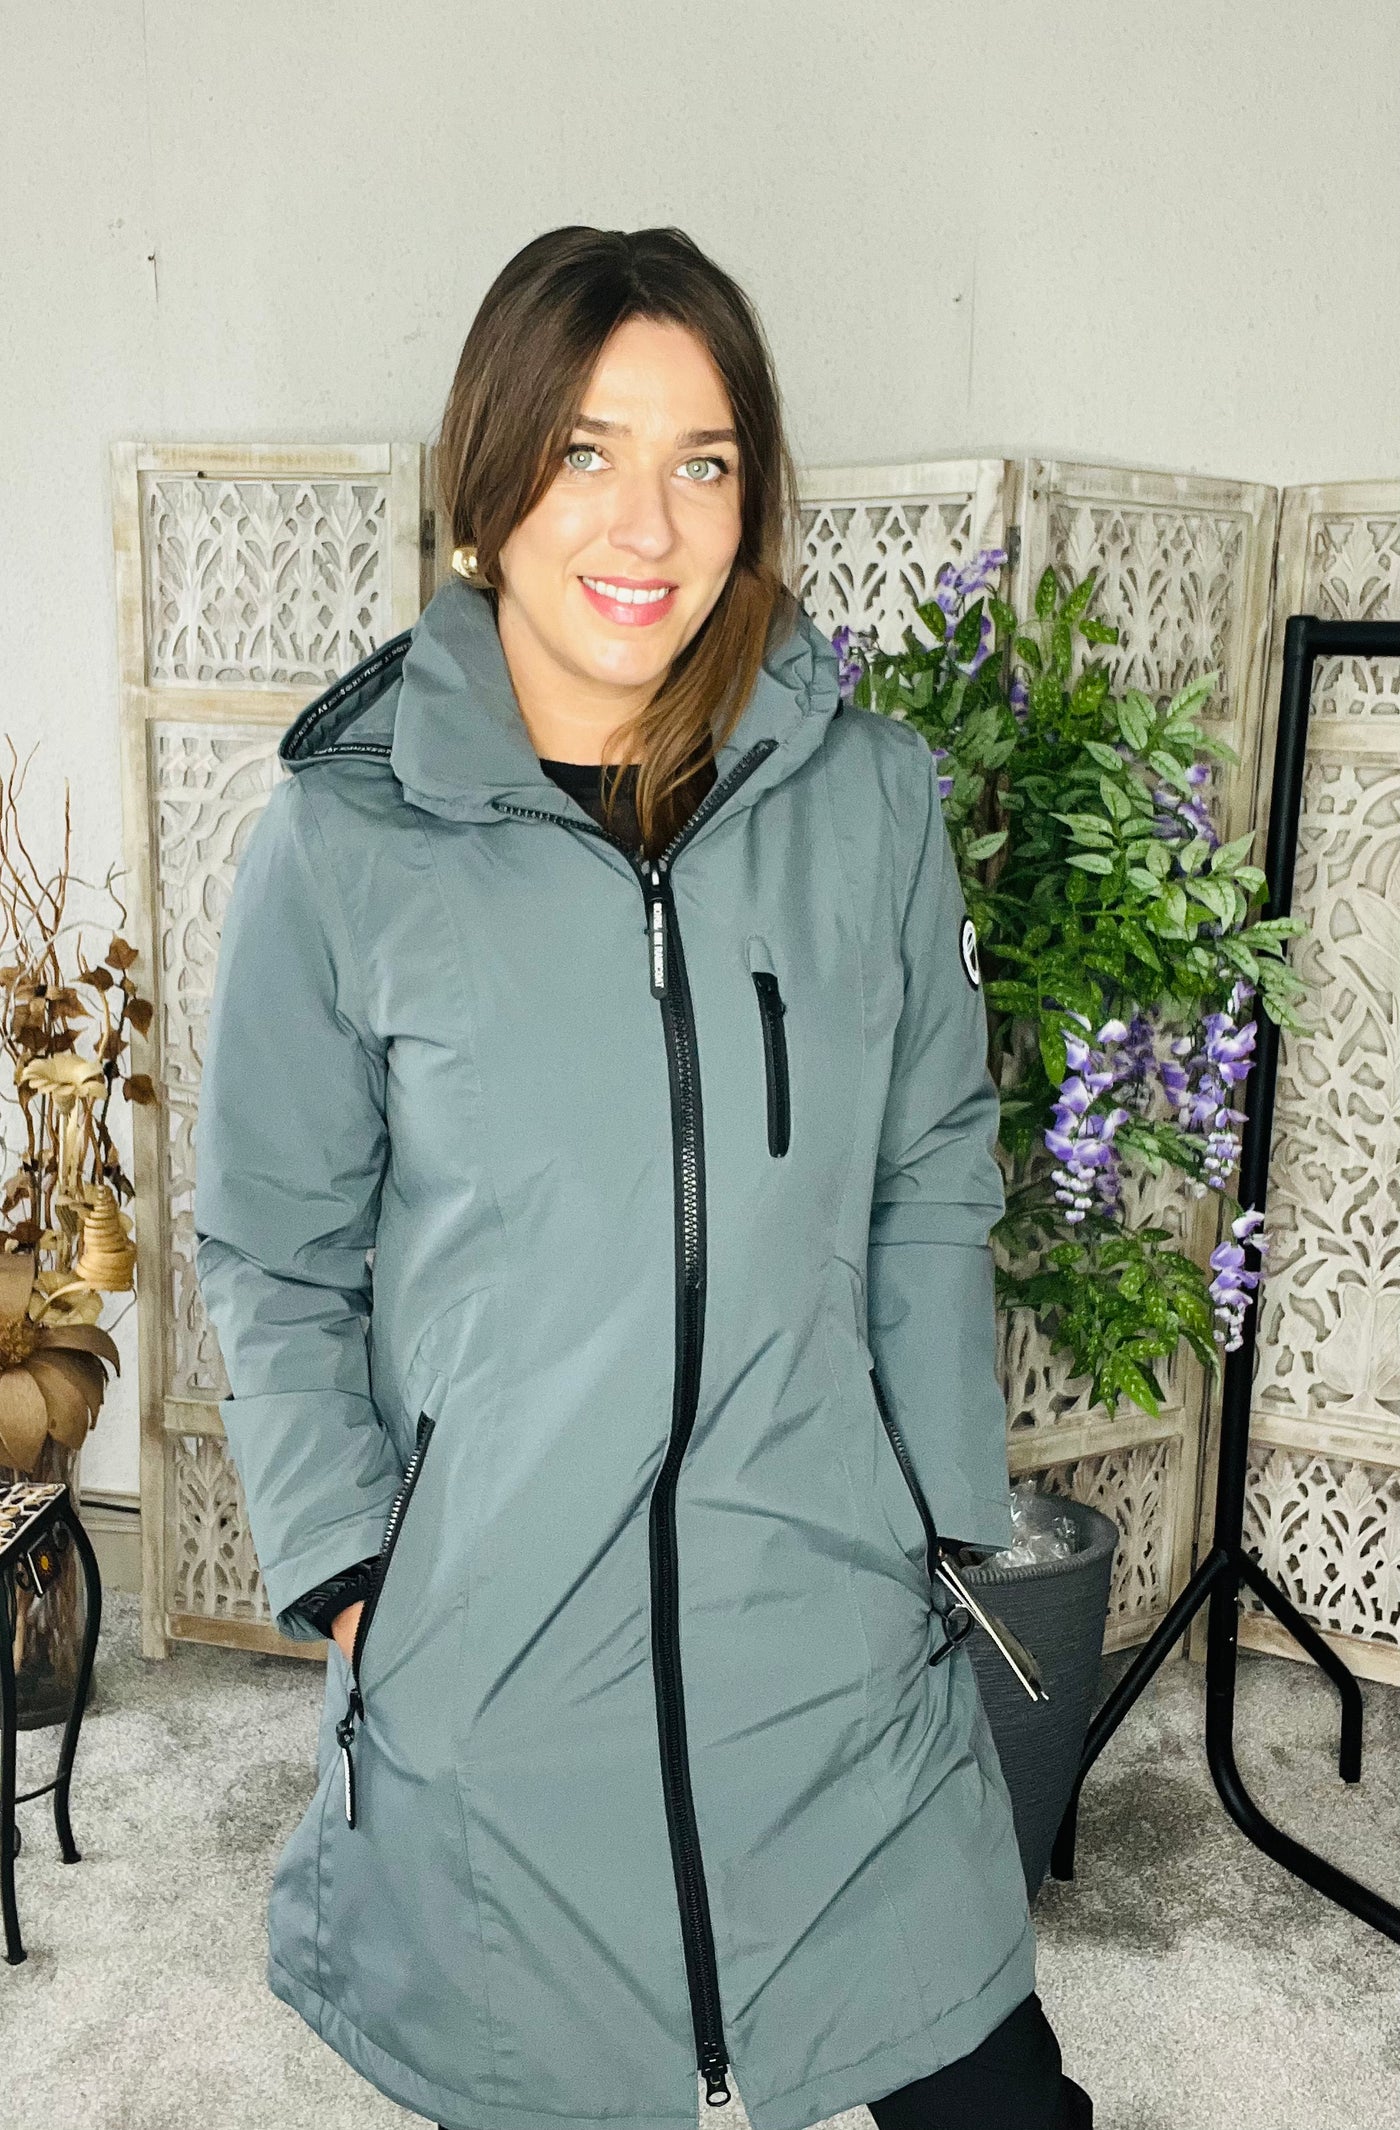 Women's normann raincoat jacket